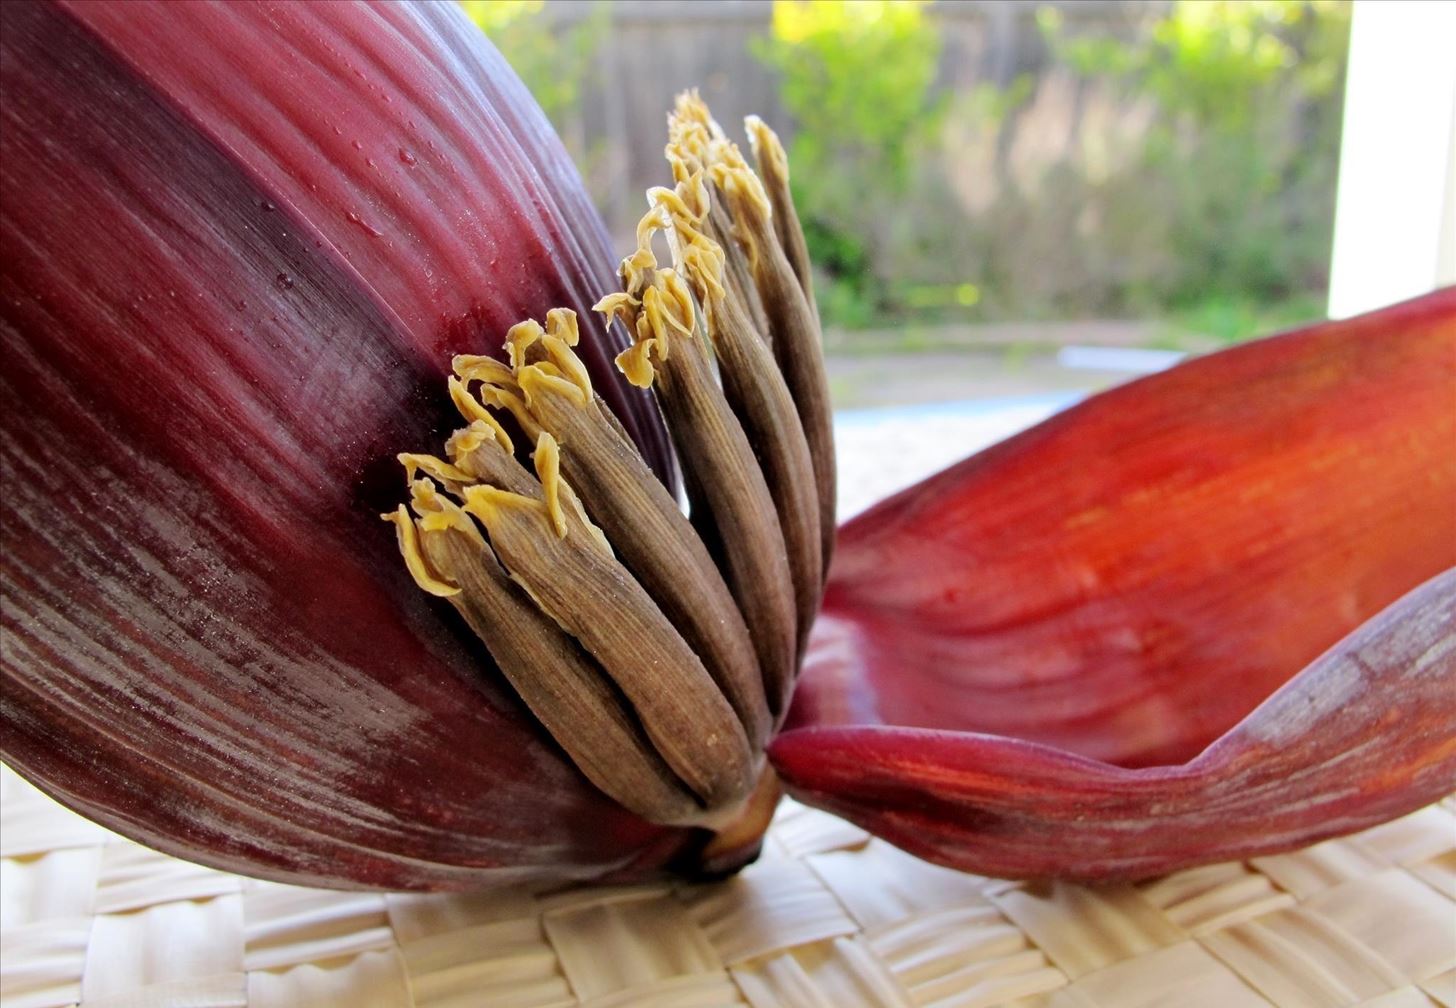 Weird Ingredient Wednesday: The Banana Flower